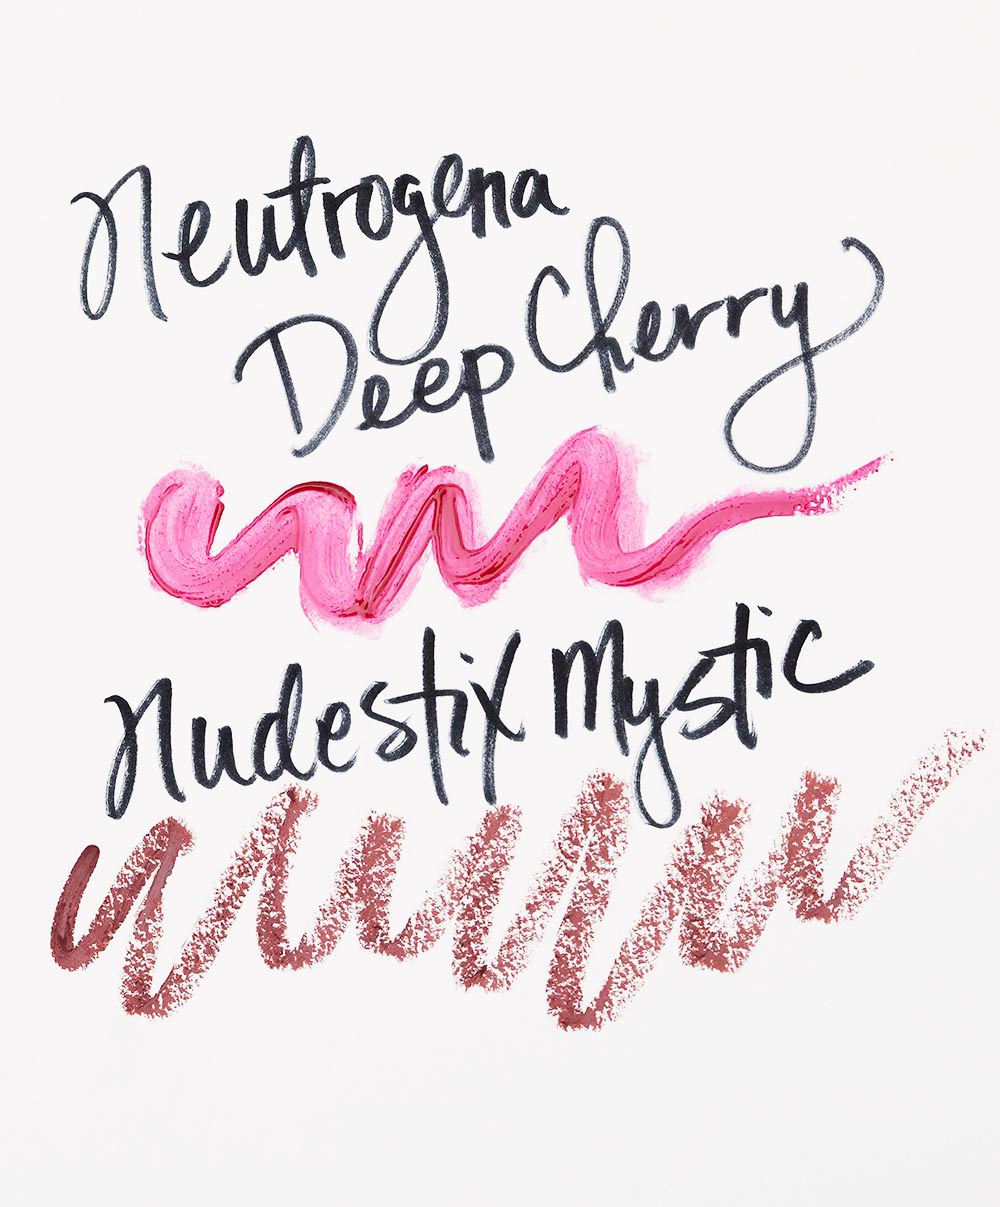 neutrogena deep cherry nudestix mystic swatch